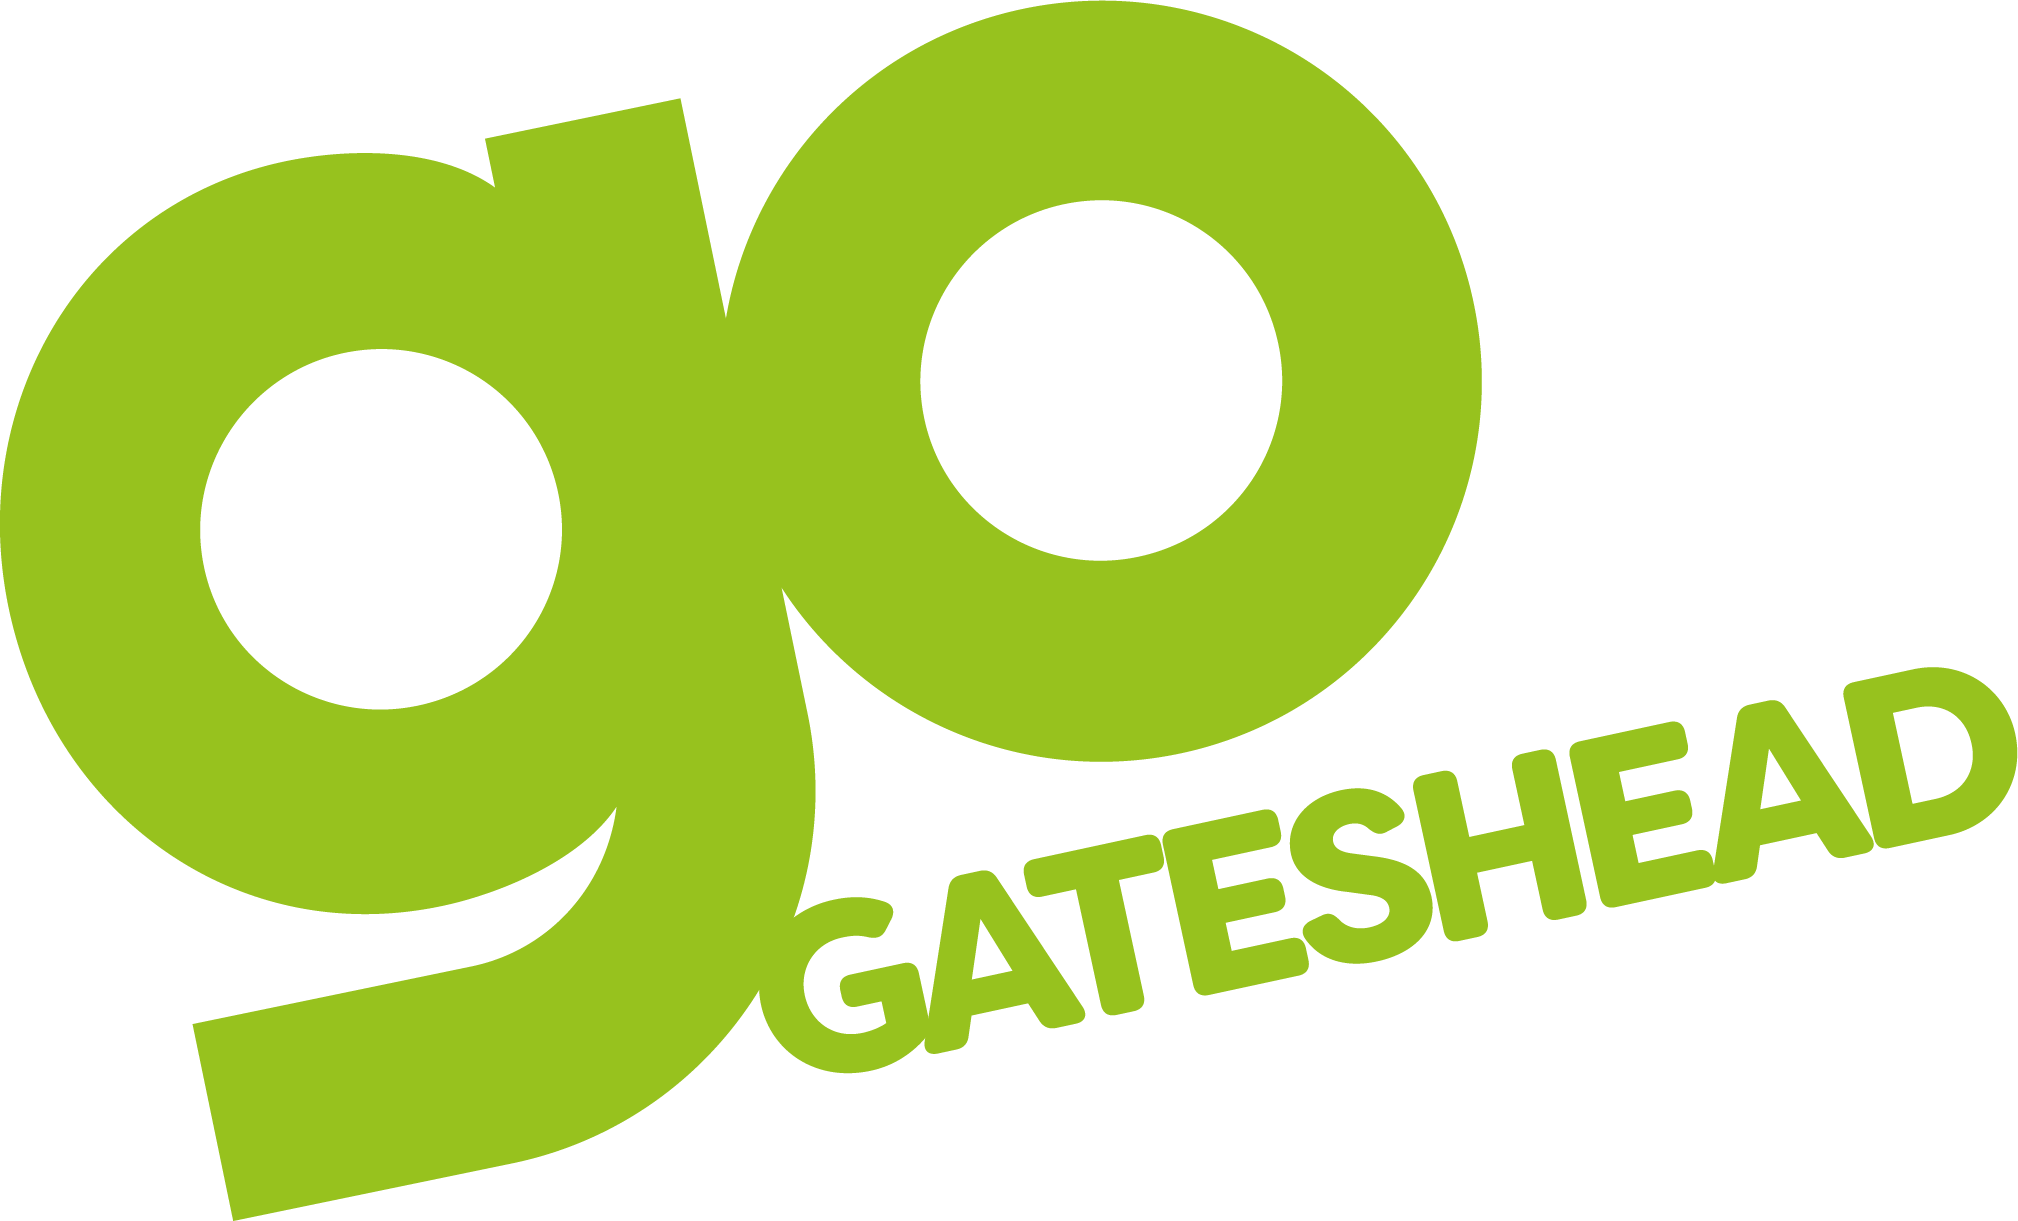 GO Gateshead logo